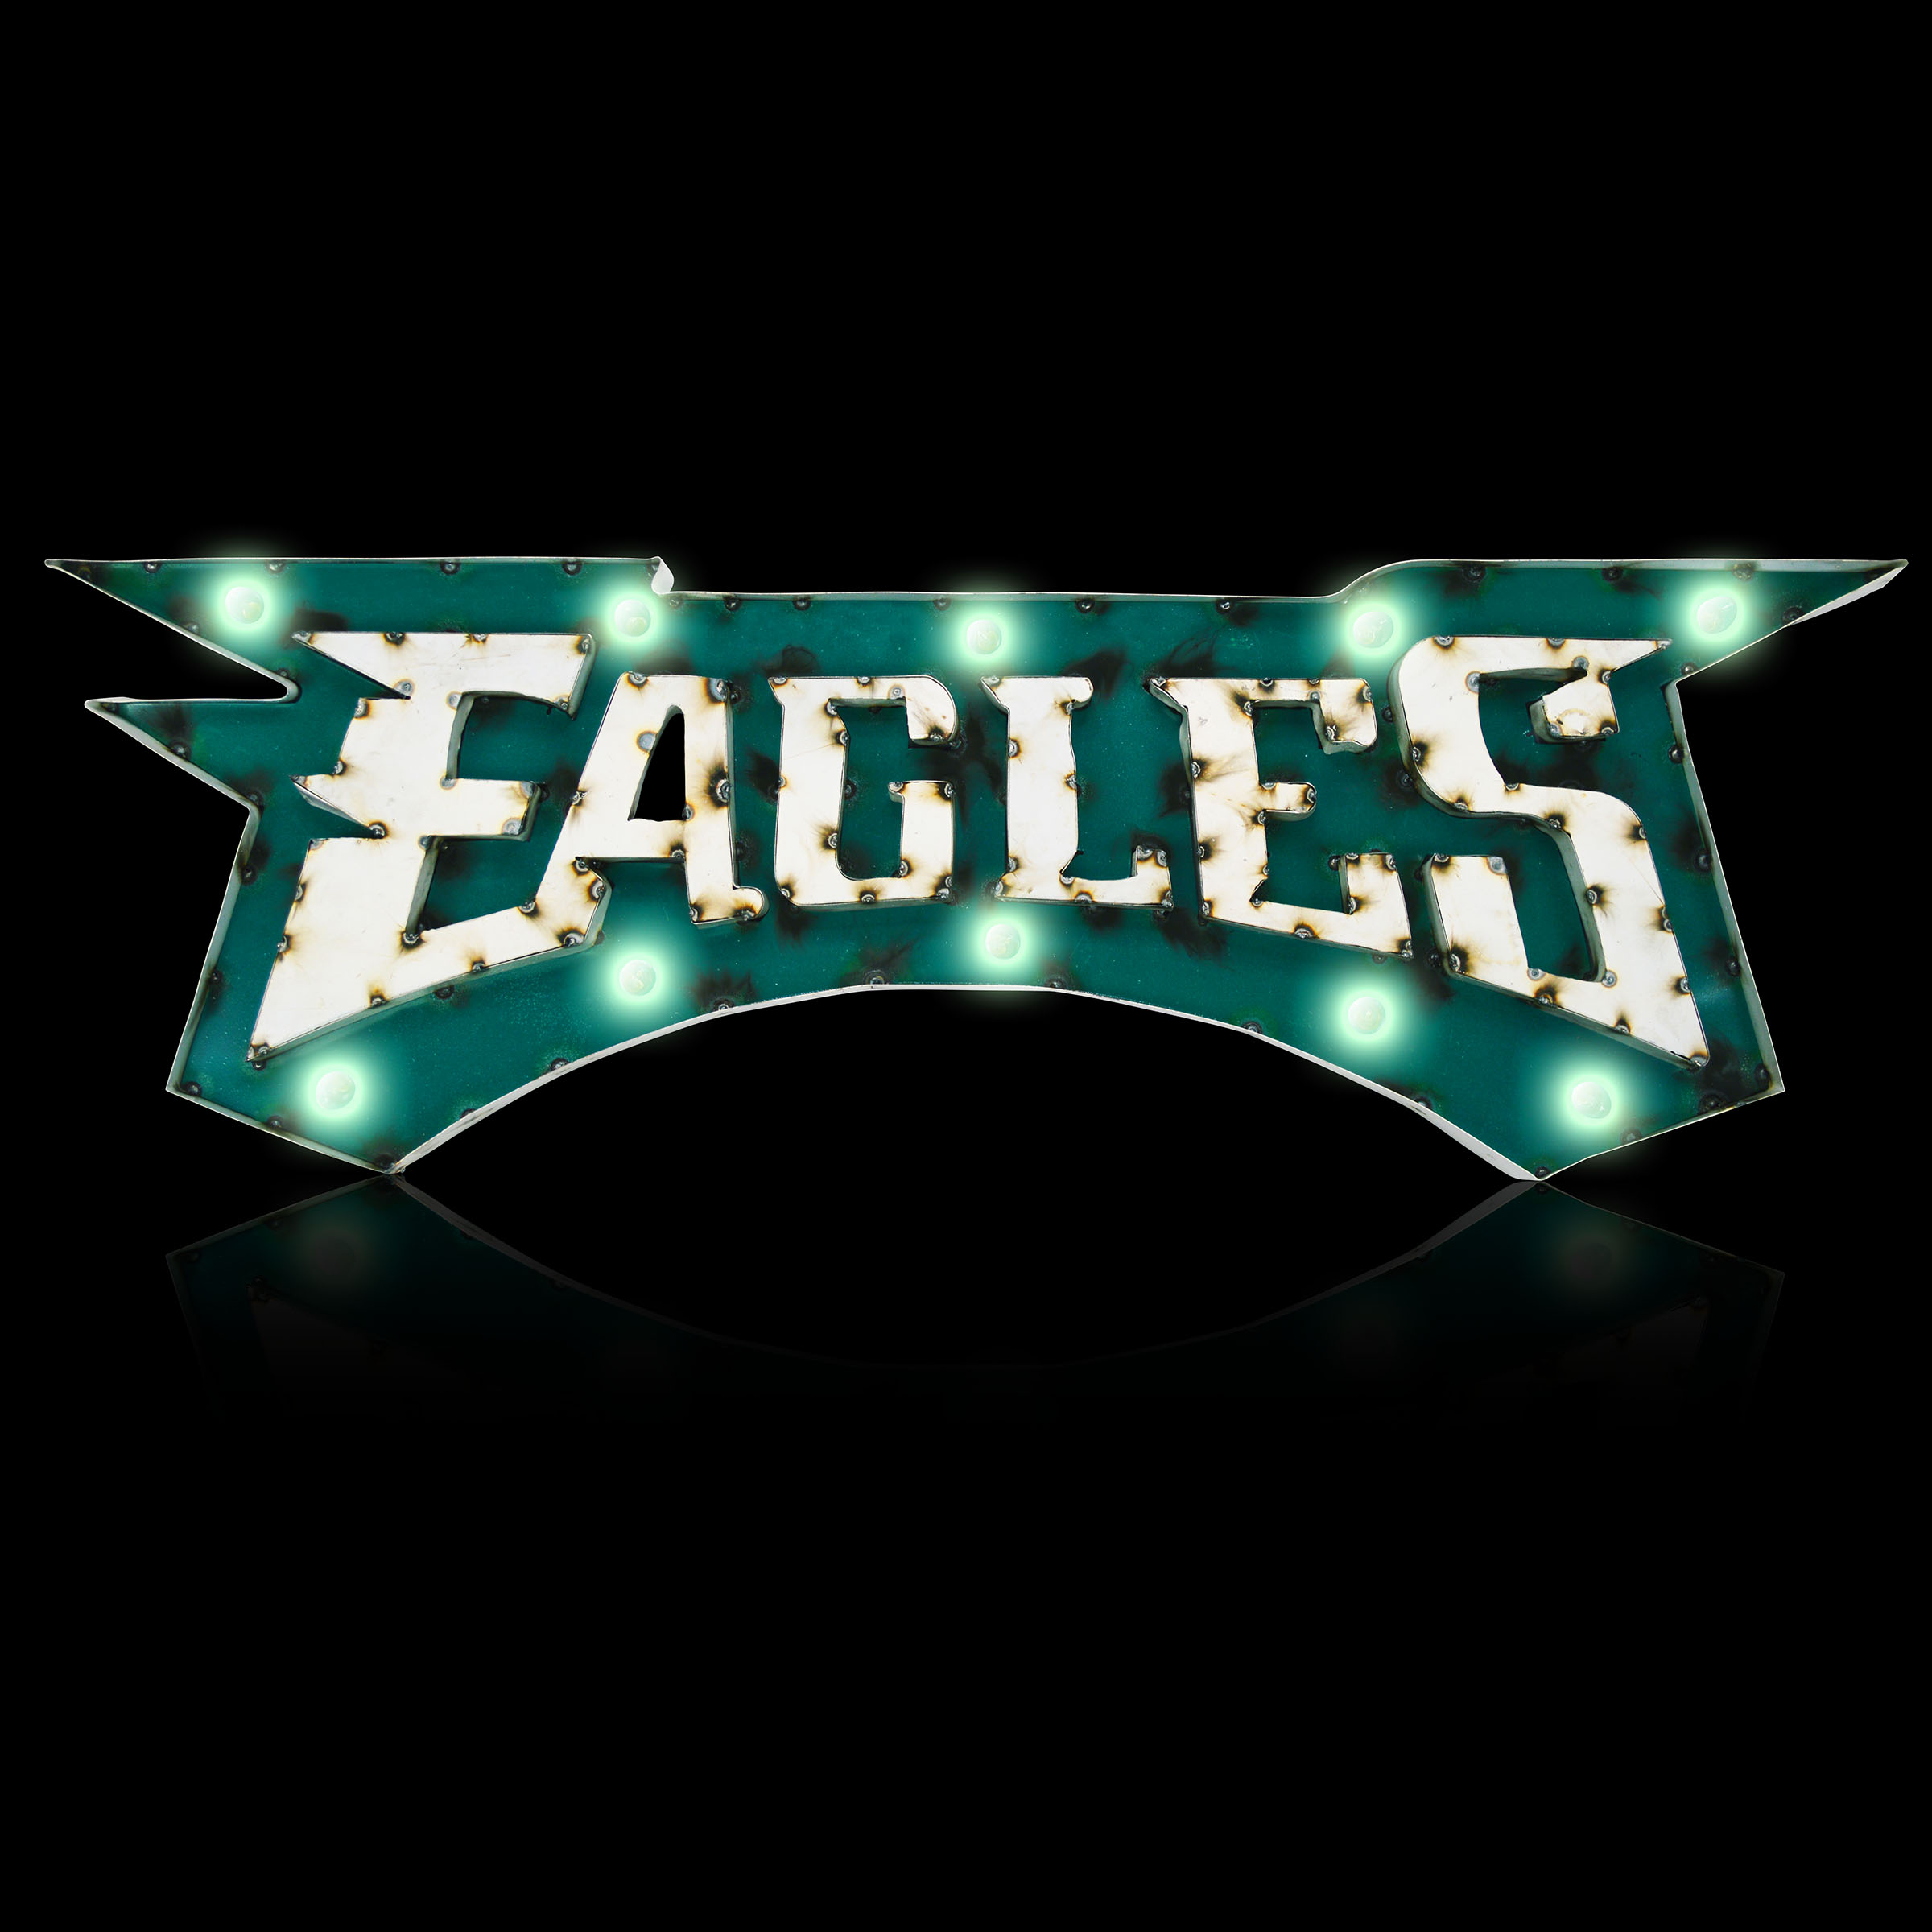 Philadelphia Eagles Recycled Metal Light Sign